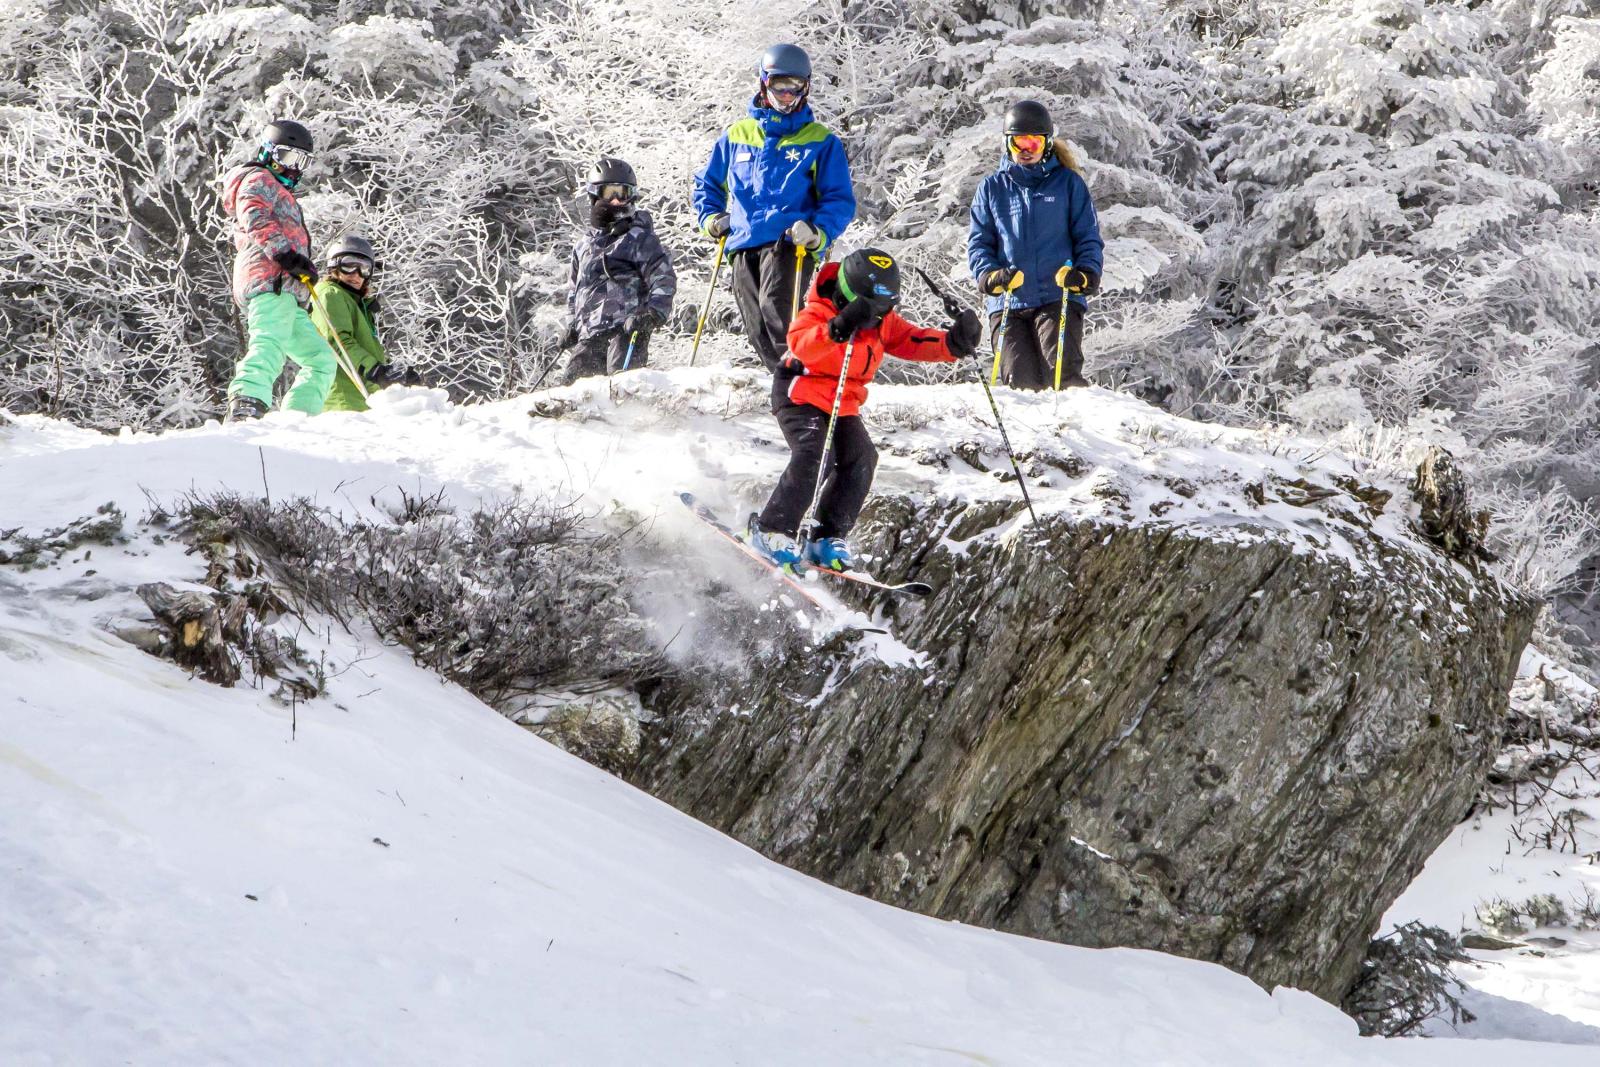 BURTON SNOWBOARDS BRINGS A NEW RIGLET PARK TO JAY PEAK RESORT